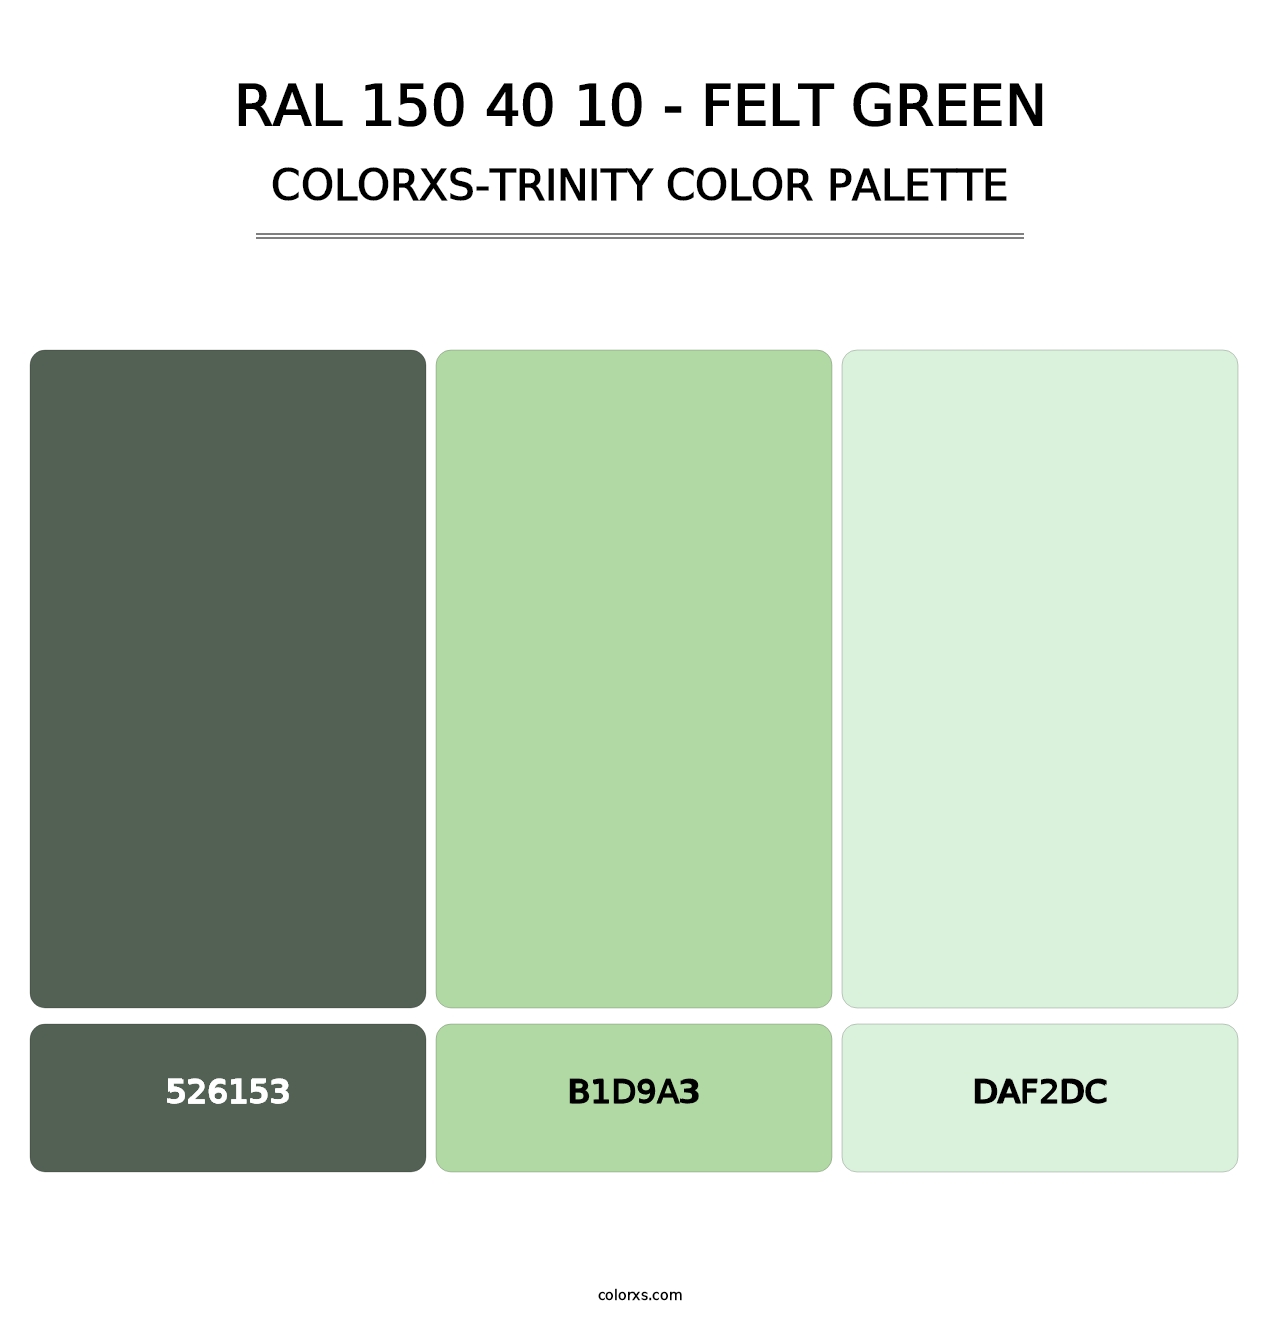 RAL 150 40 10 - Felt Green - Colorxs Trinity Palette